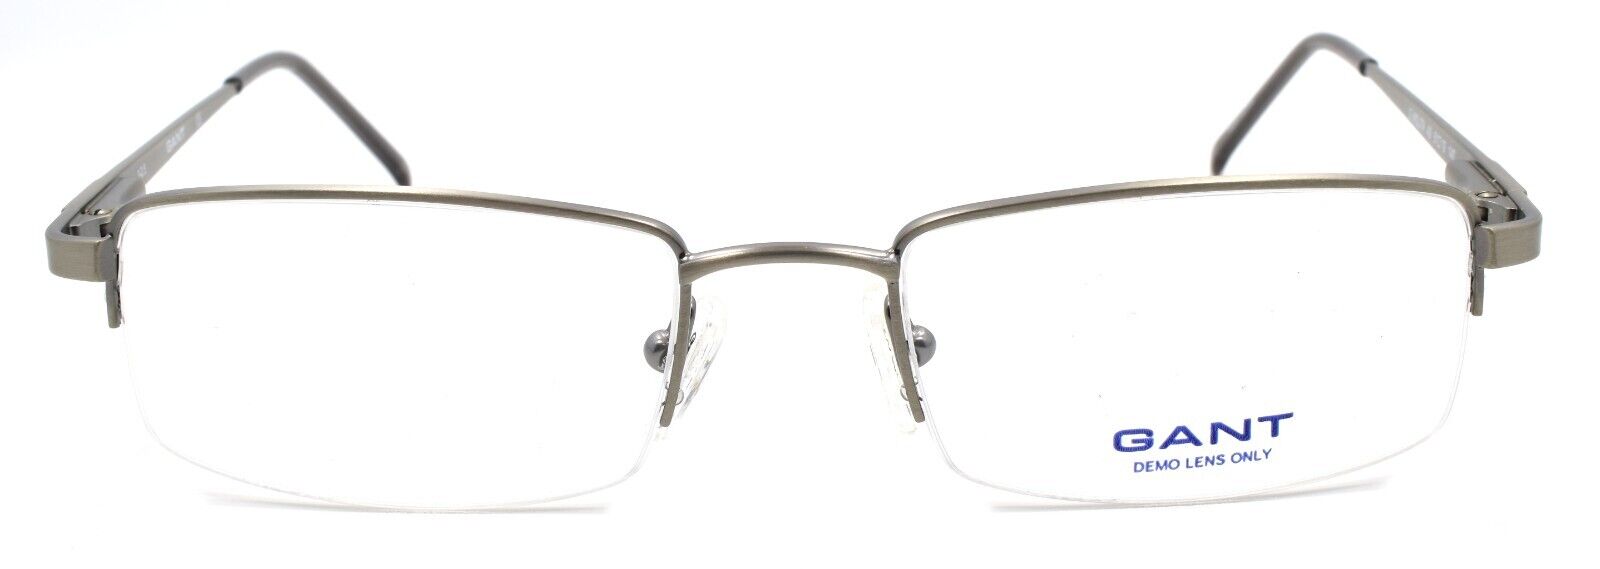 2-GANT G Nolita AS Men's Eyeglasses Frames Half-rim 51-19-140 Antique Silver-715583900325-IKSpecs